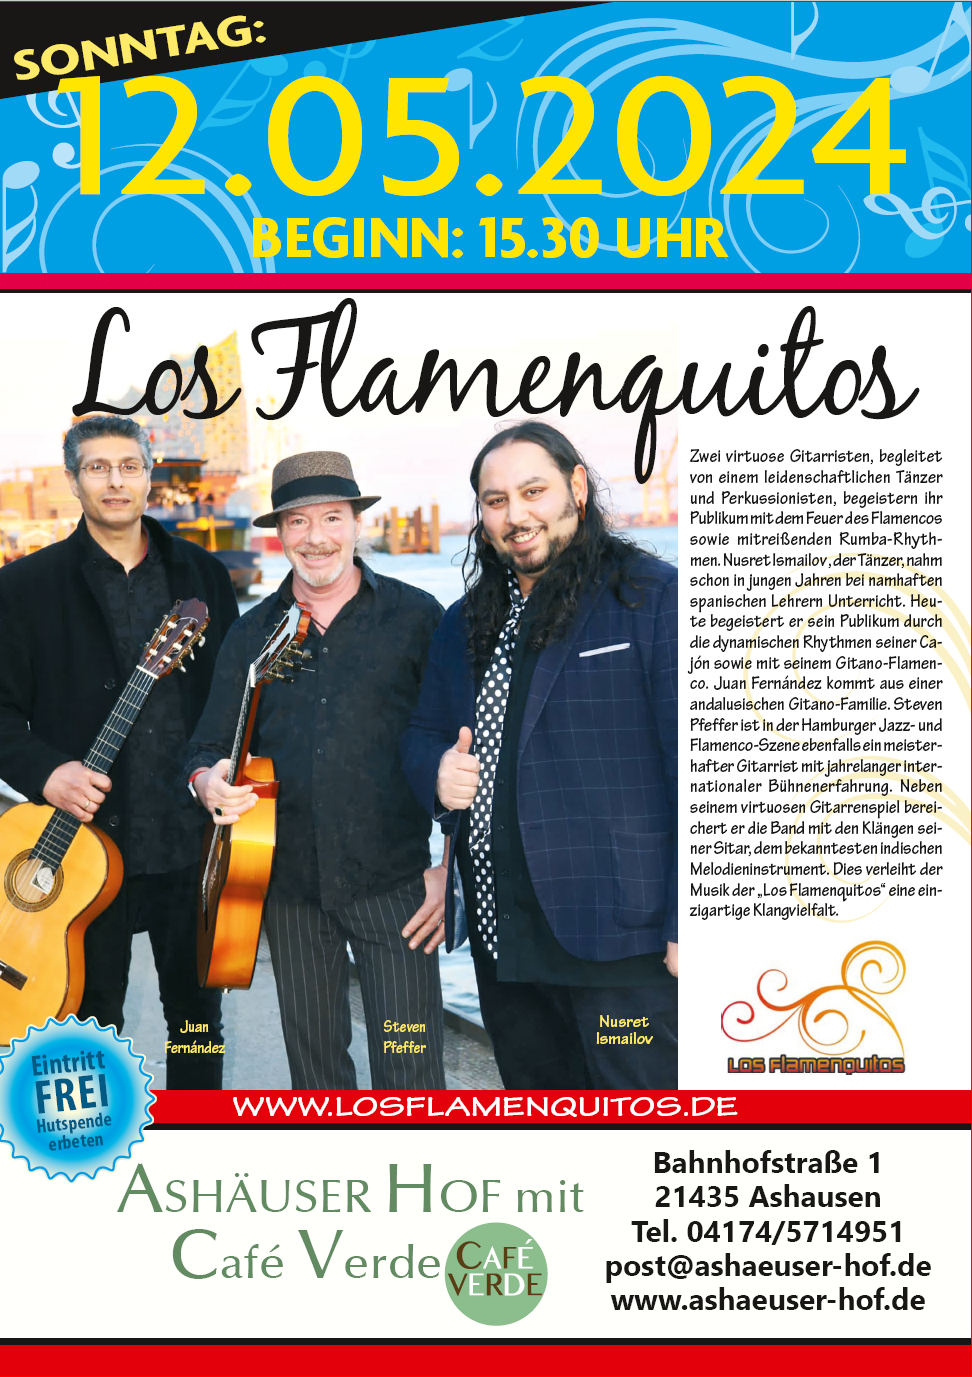 Read more about the article Sonntagskonzert mit Los Flamenquitos